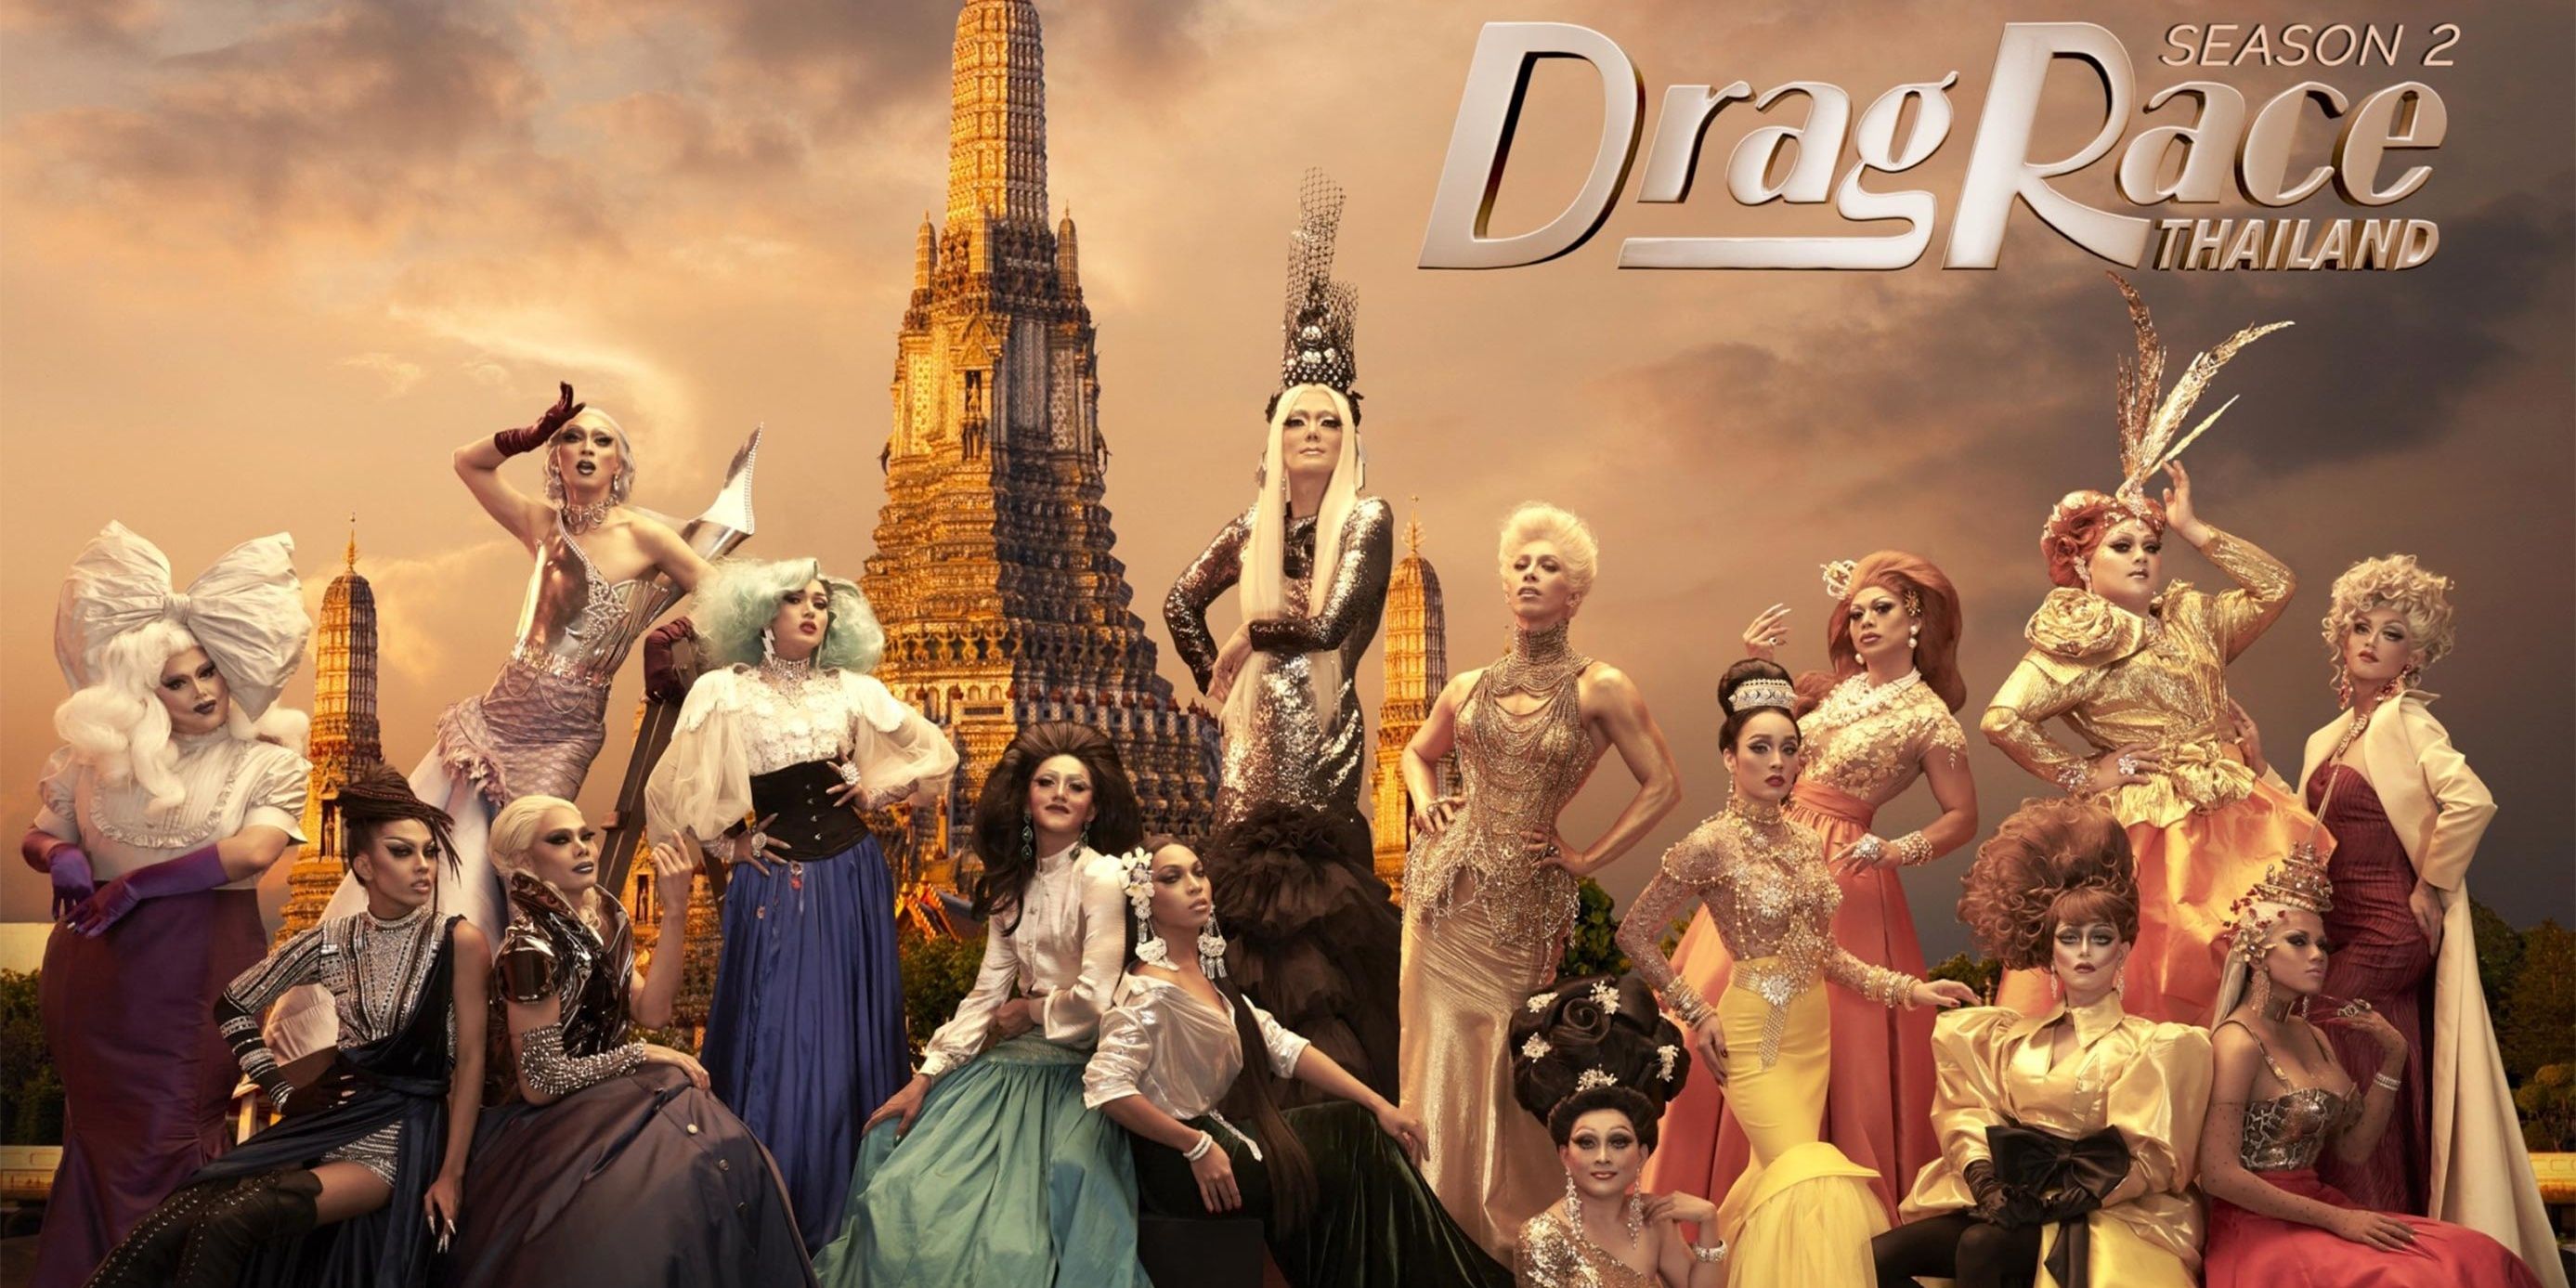 Drag Race Thailand cast shot with logo